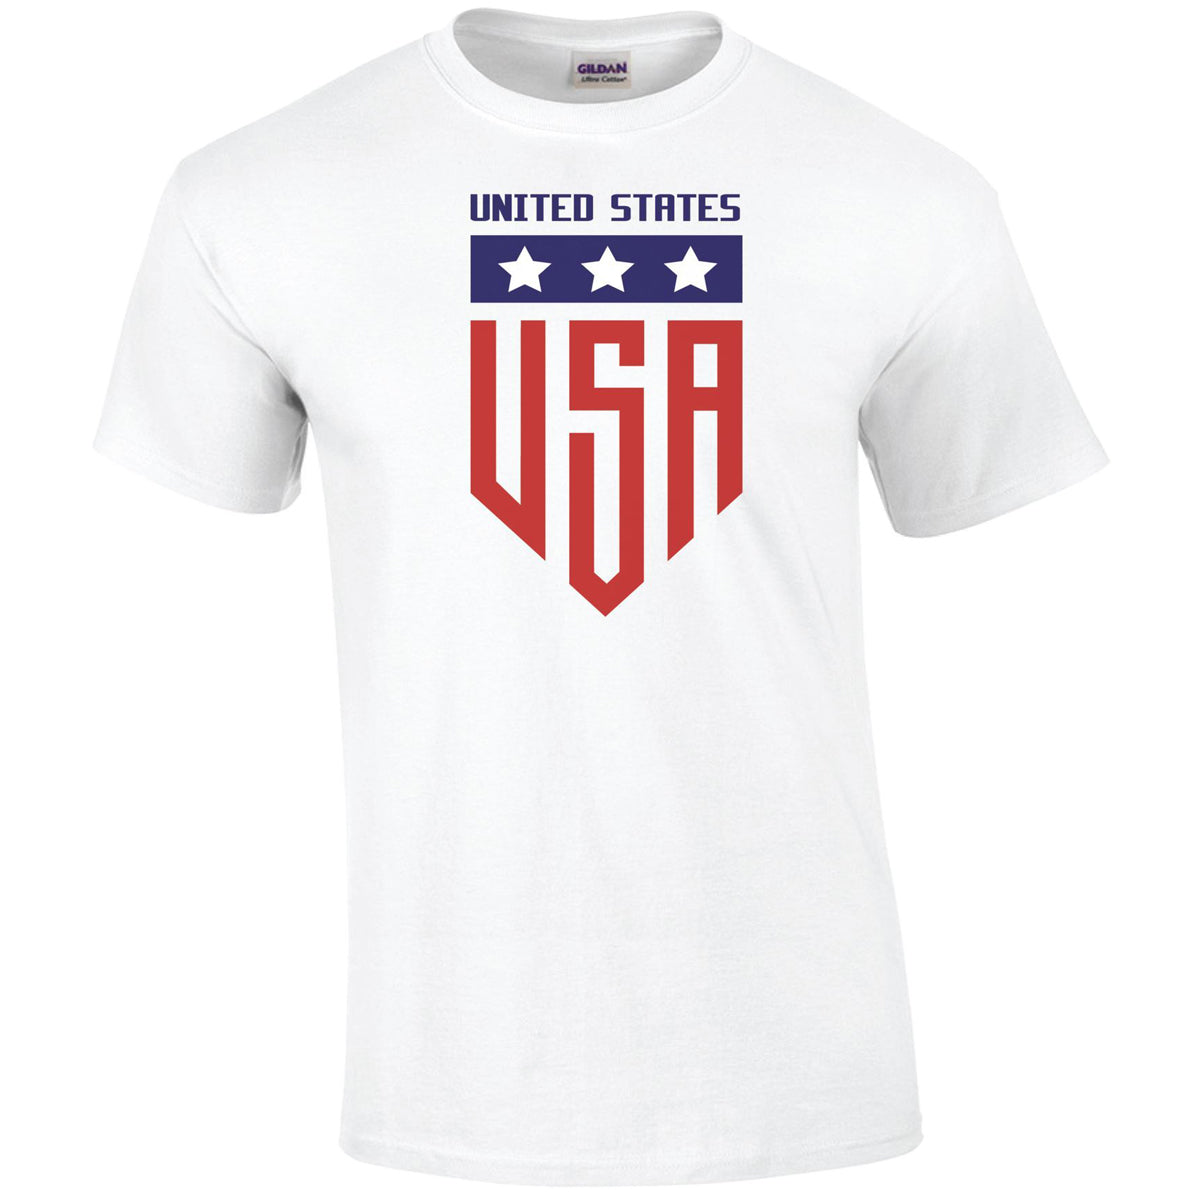 USA Soccer T-Shirt - USA T-shirts 411 Youth Medium White Youth